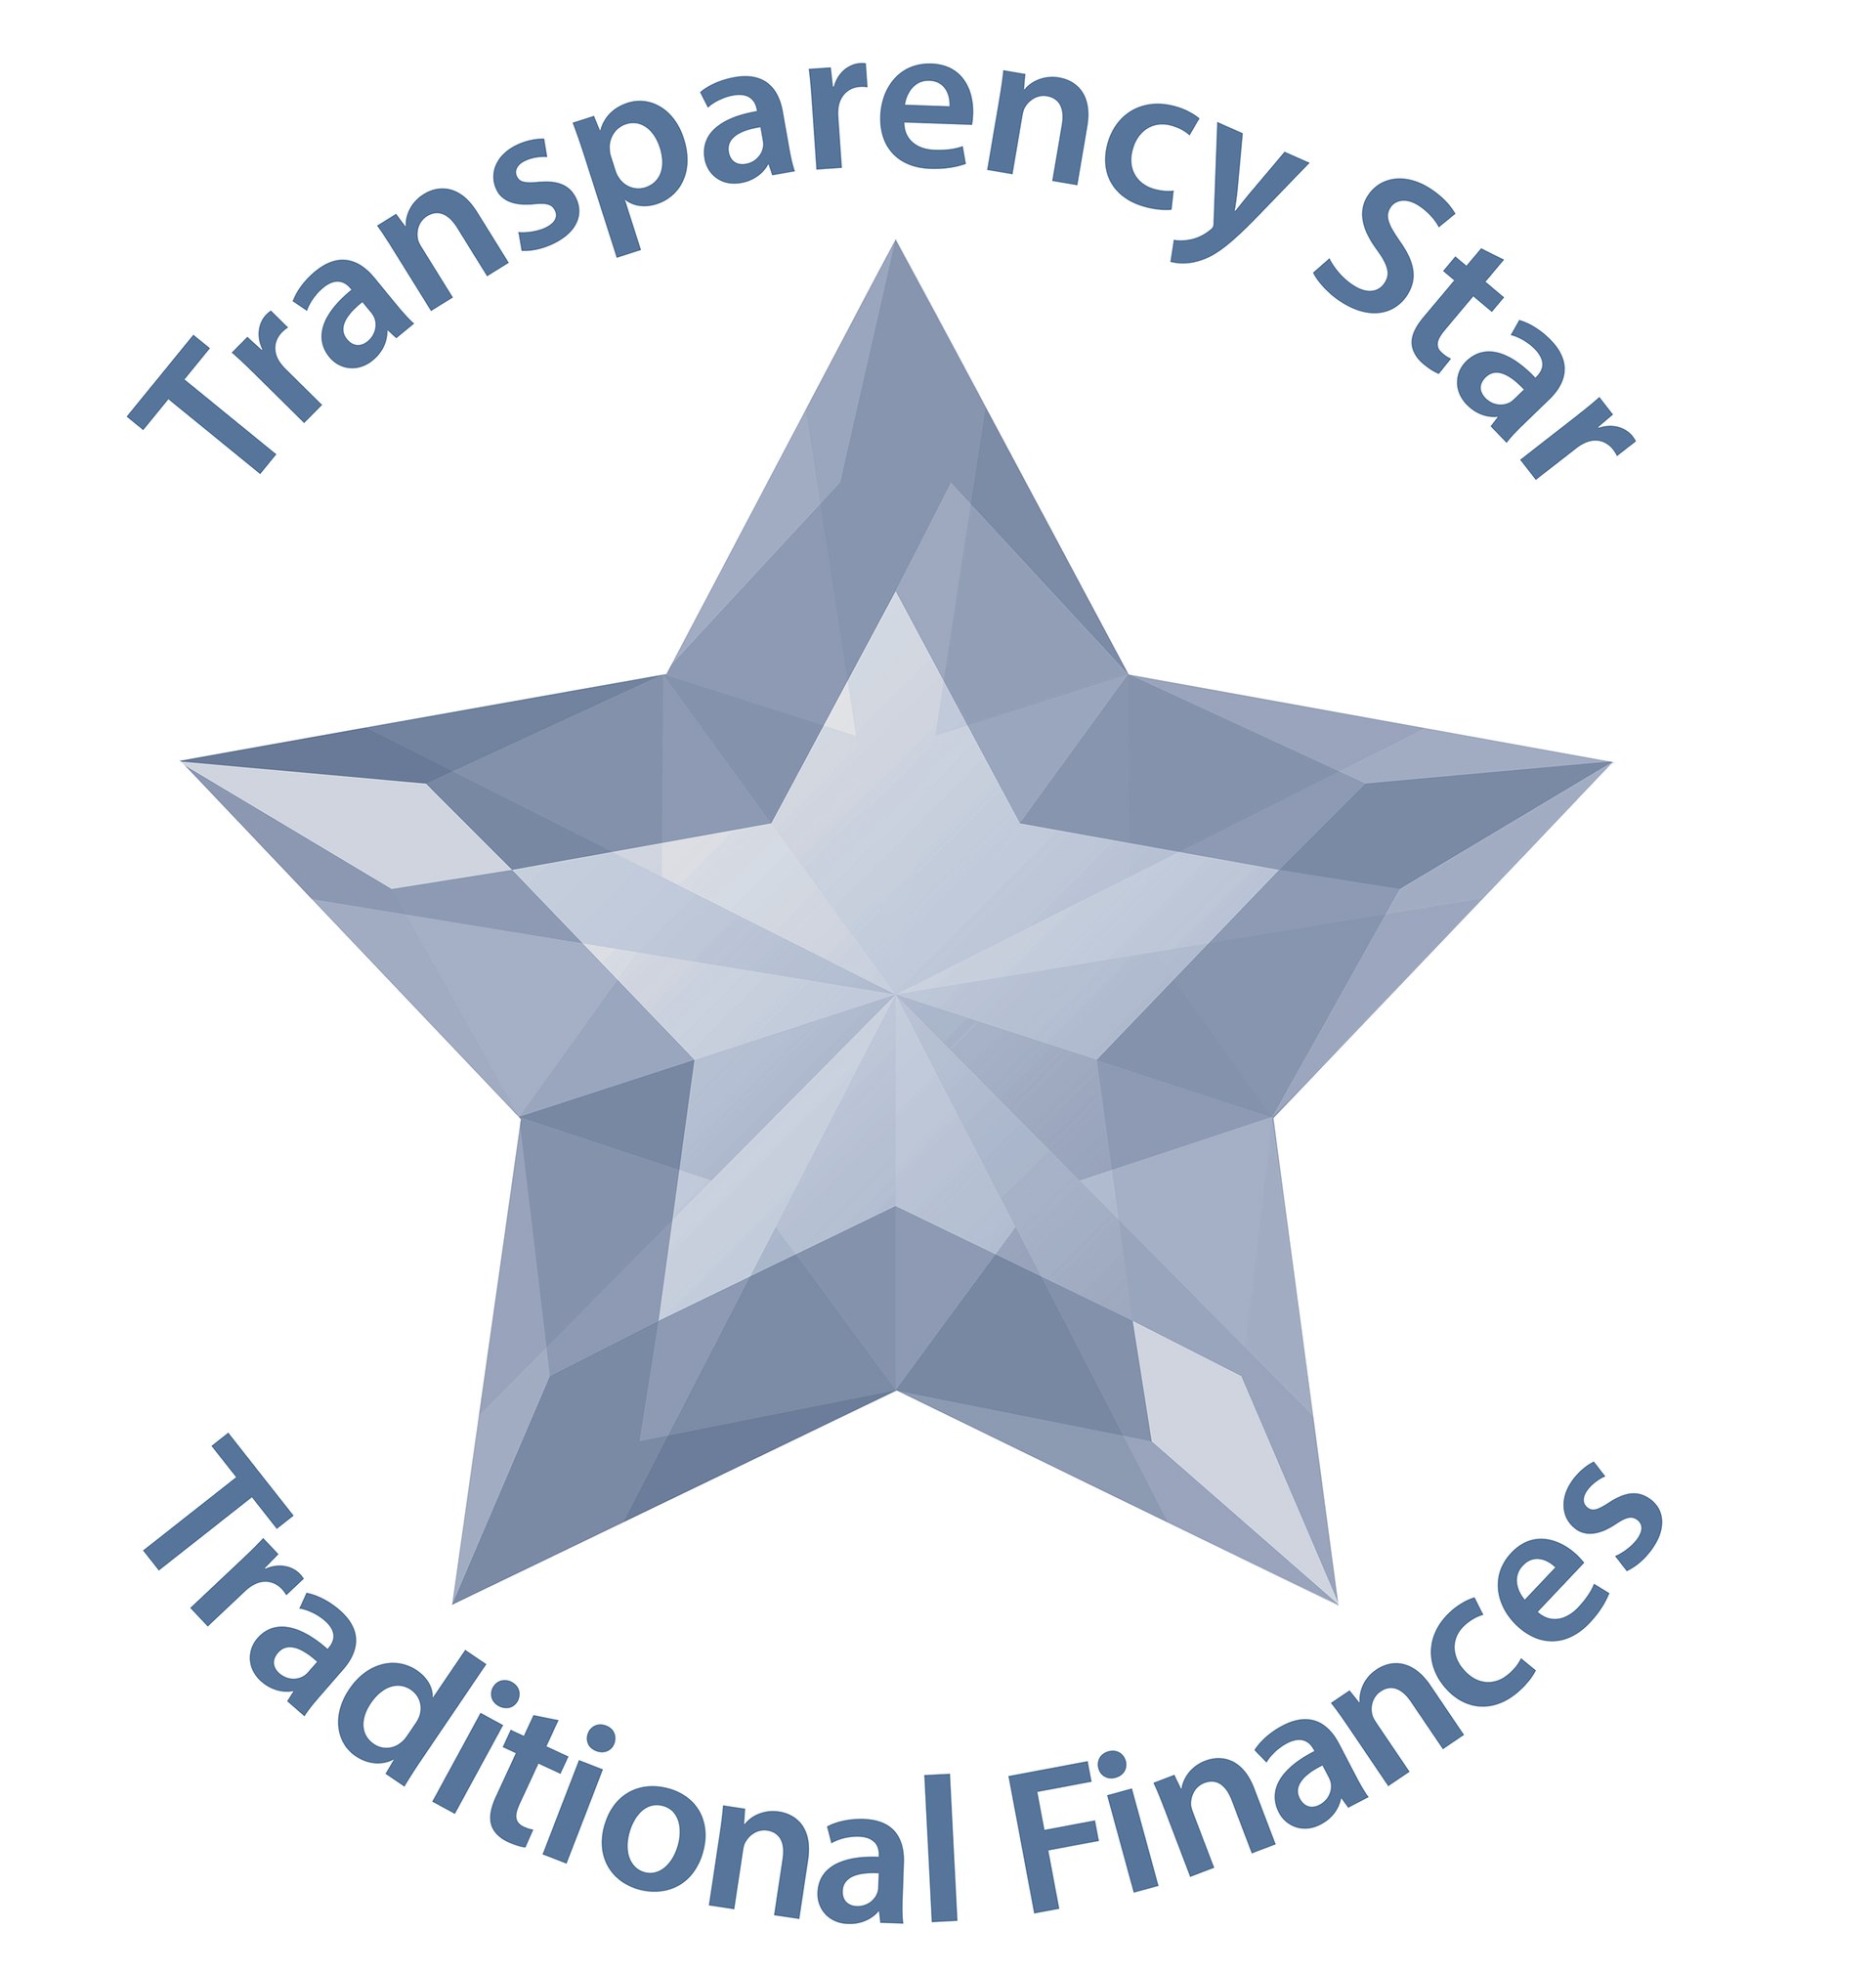 TransparencyStar